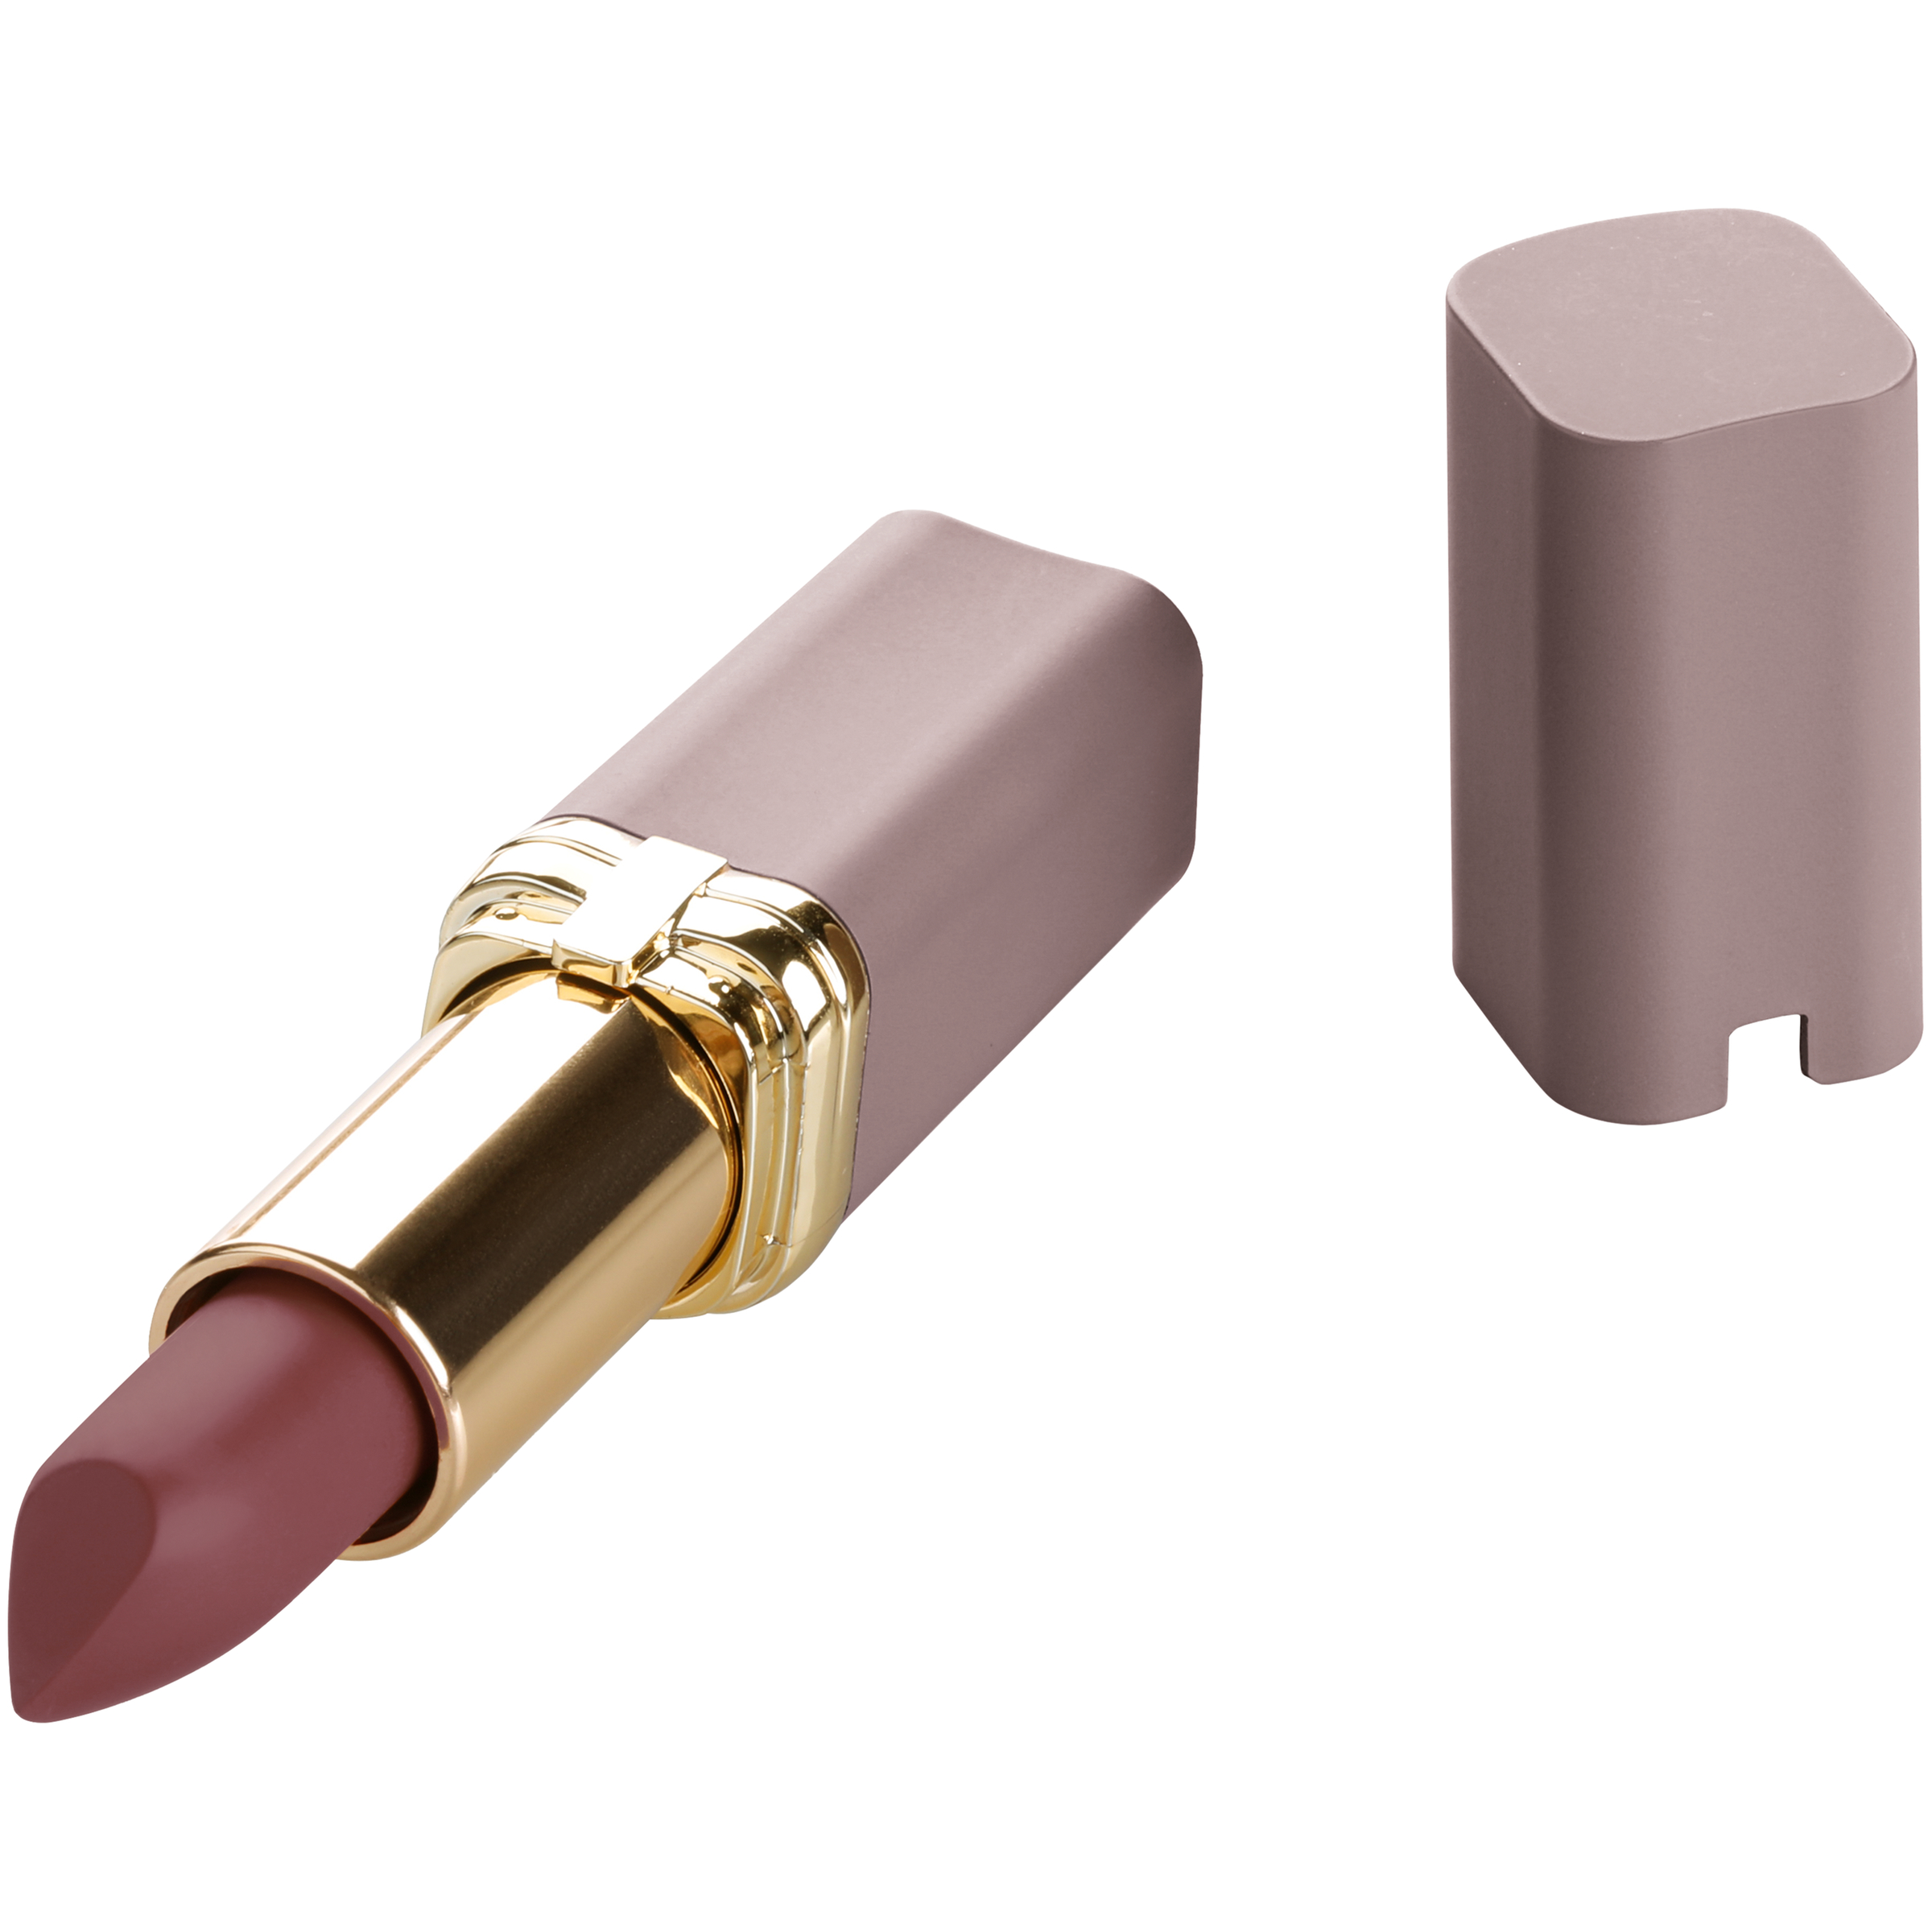 L'Oreal Paris Colour Riche Ultra Matte Highly Pigmented Nude Lipstick, Bold Mauve, 0.13 oz. - image 5 of 5